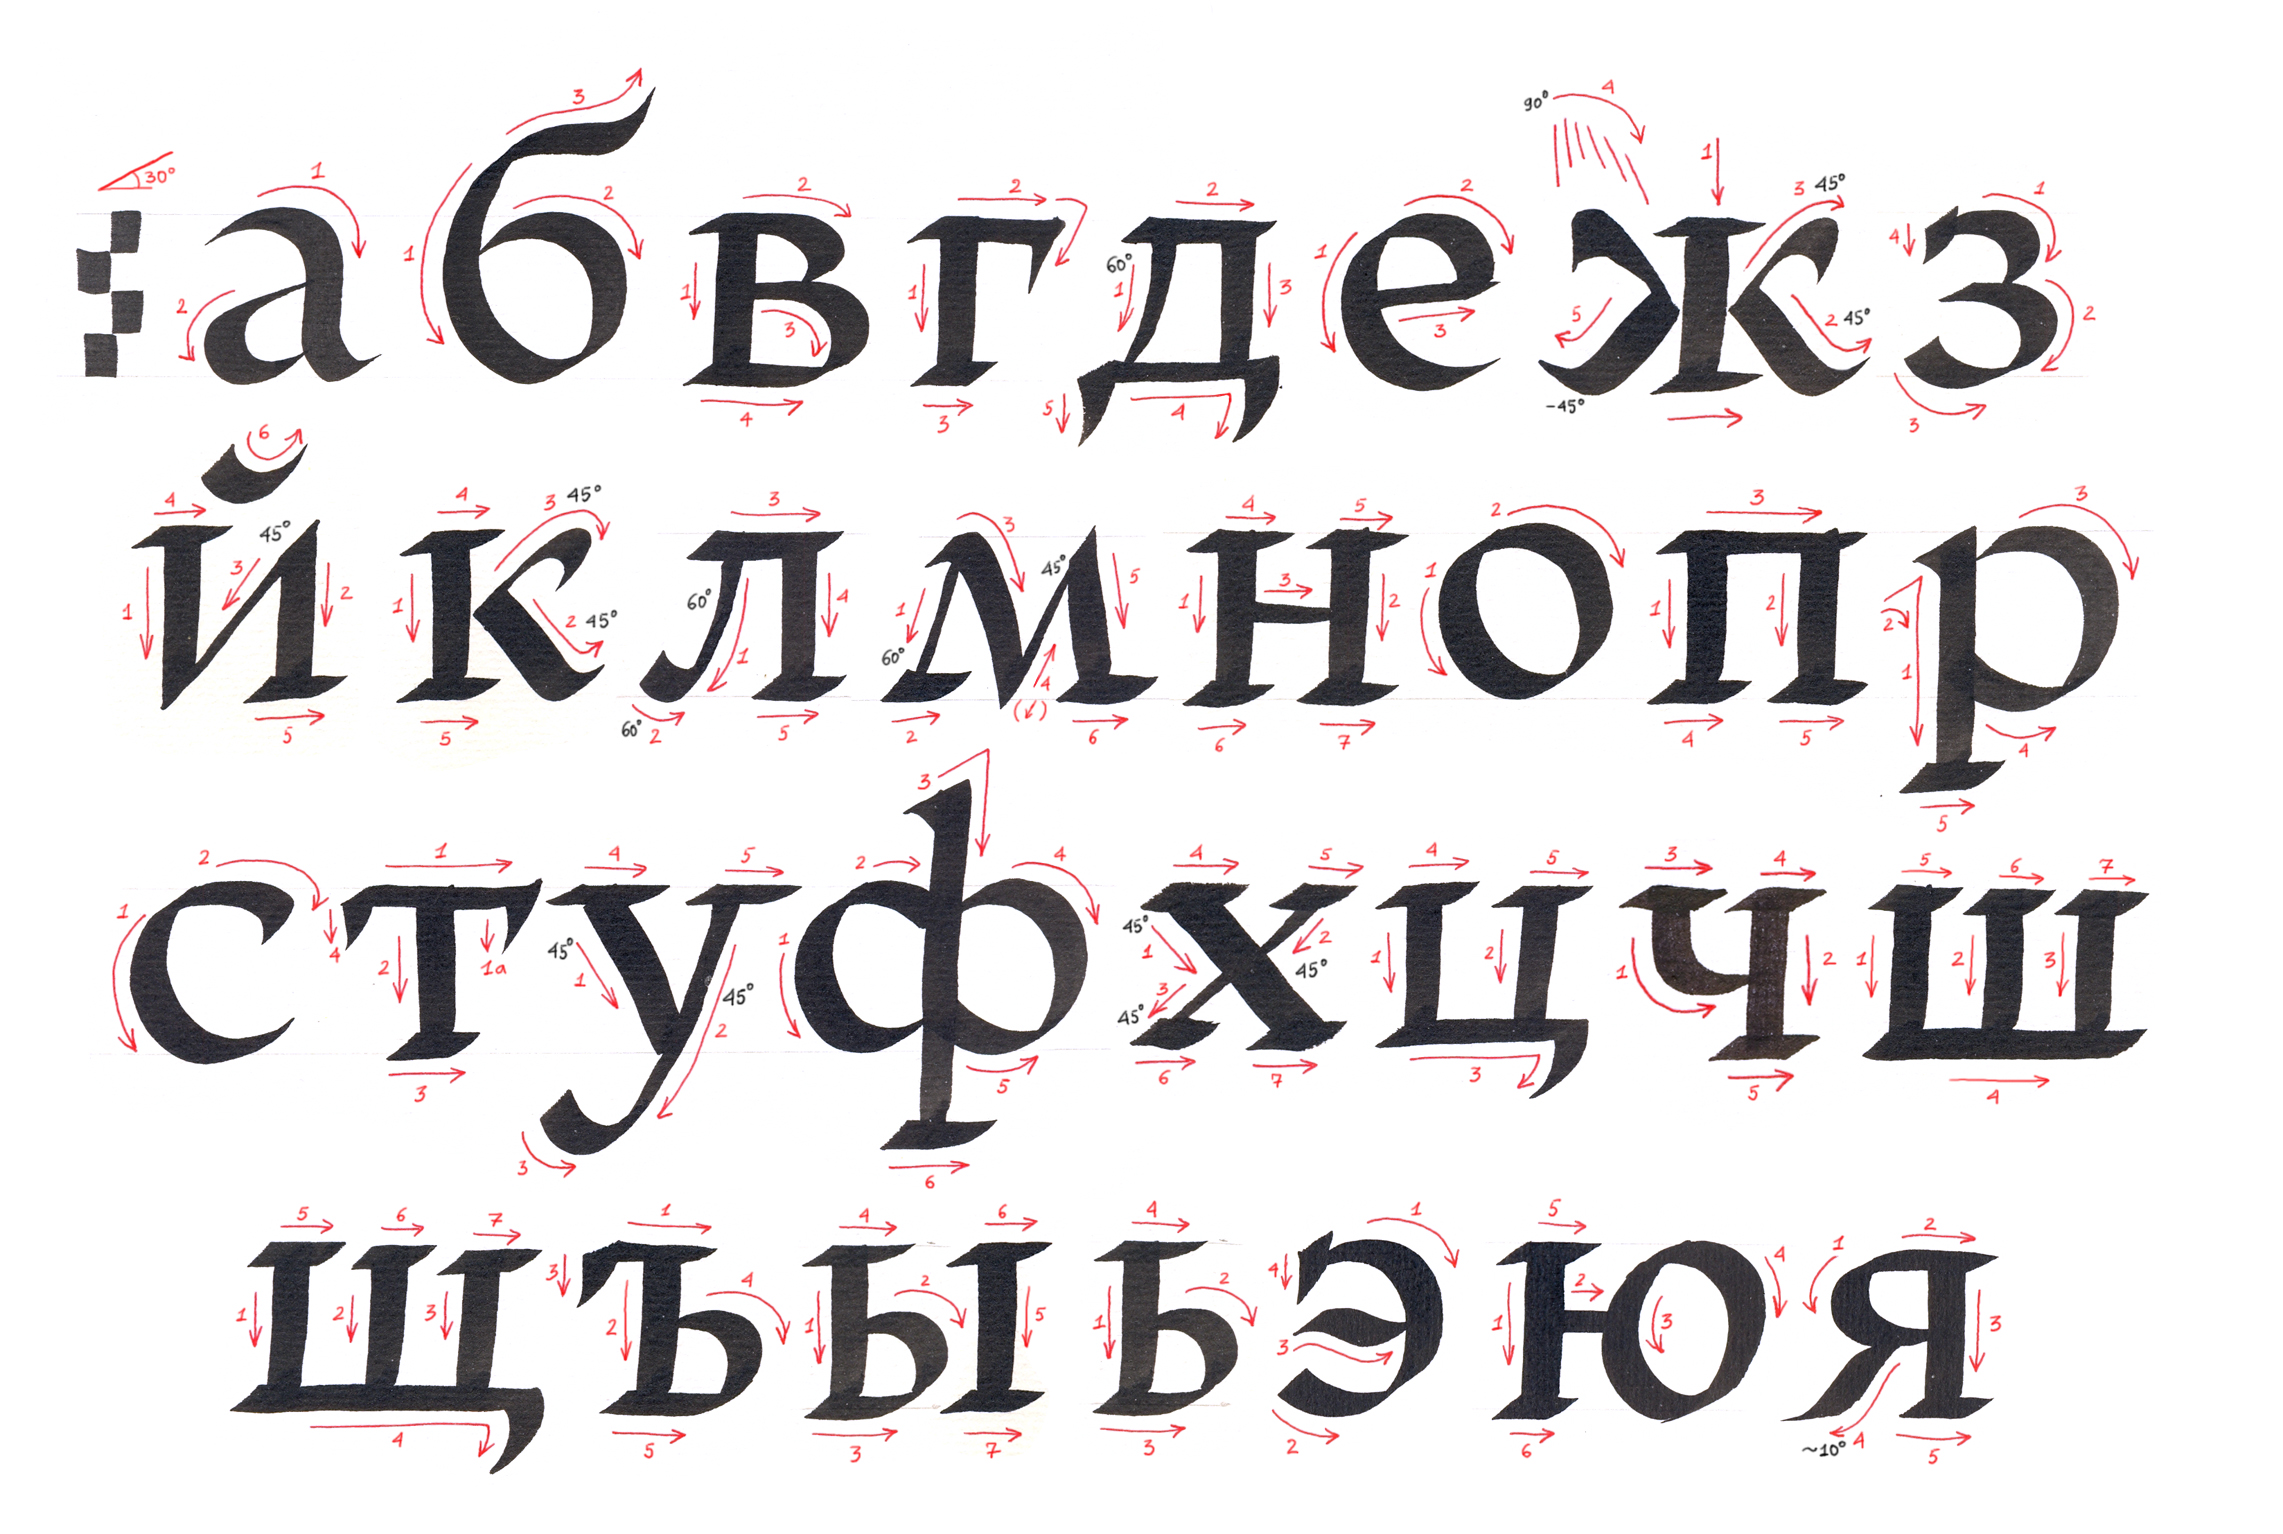 Cyrillic samples by Vera Evstafieva